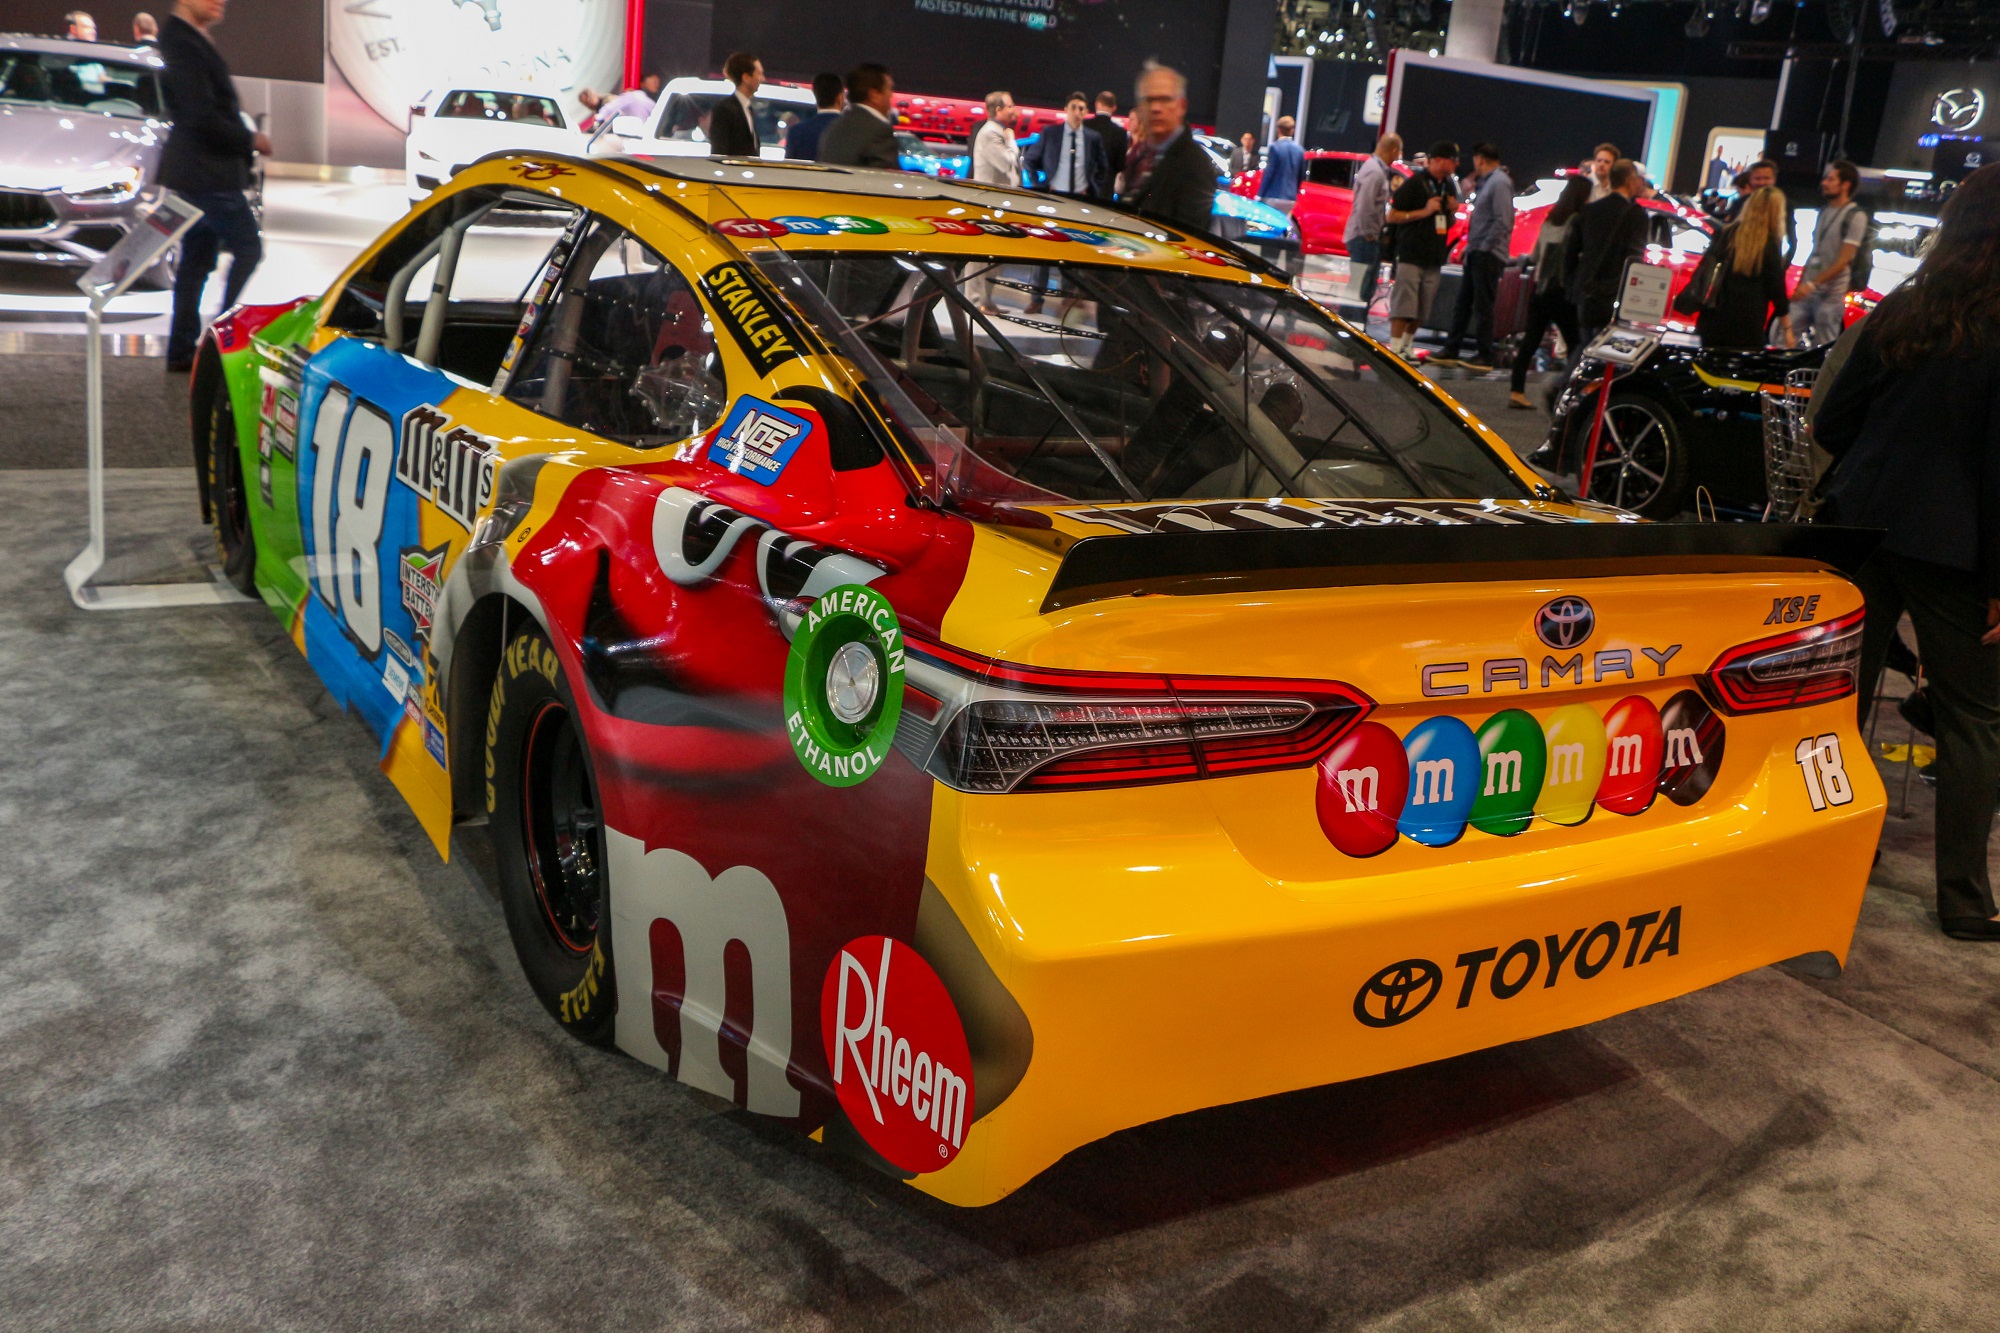 2019 Toyota Camry NASCAR Los Angeles Auto Show